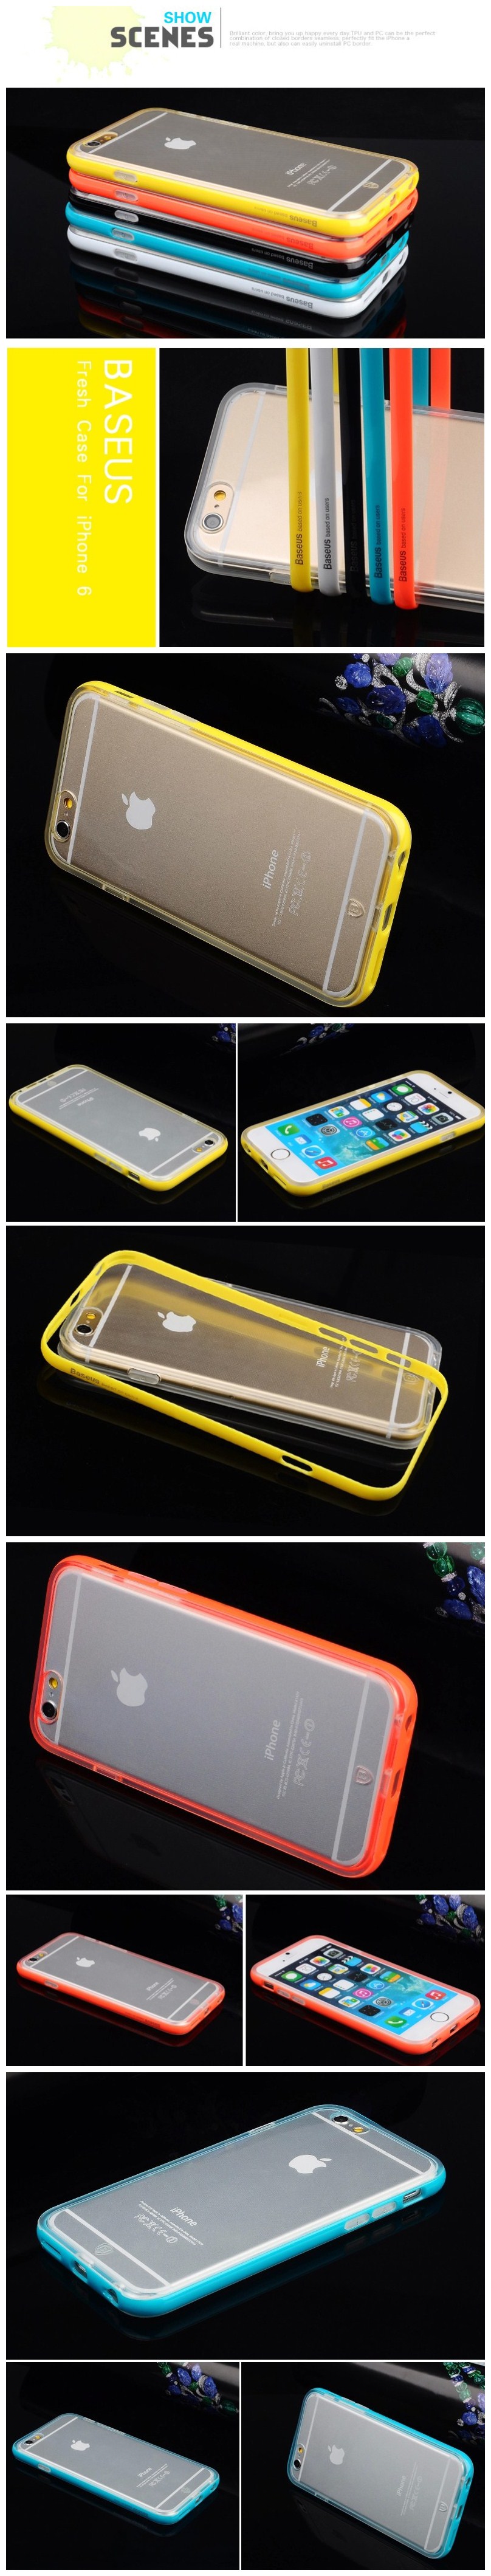 BASEUS-Fresh-TPU-Back-Cover-PC-Frame-Case-For-Apple-iPhone-6-6S-6Plus-6S-Plus-1017651-2